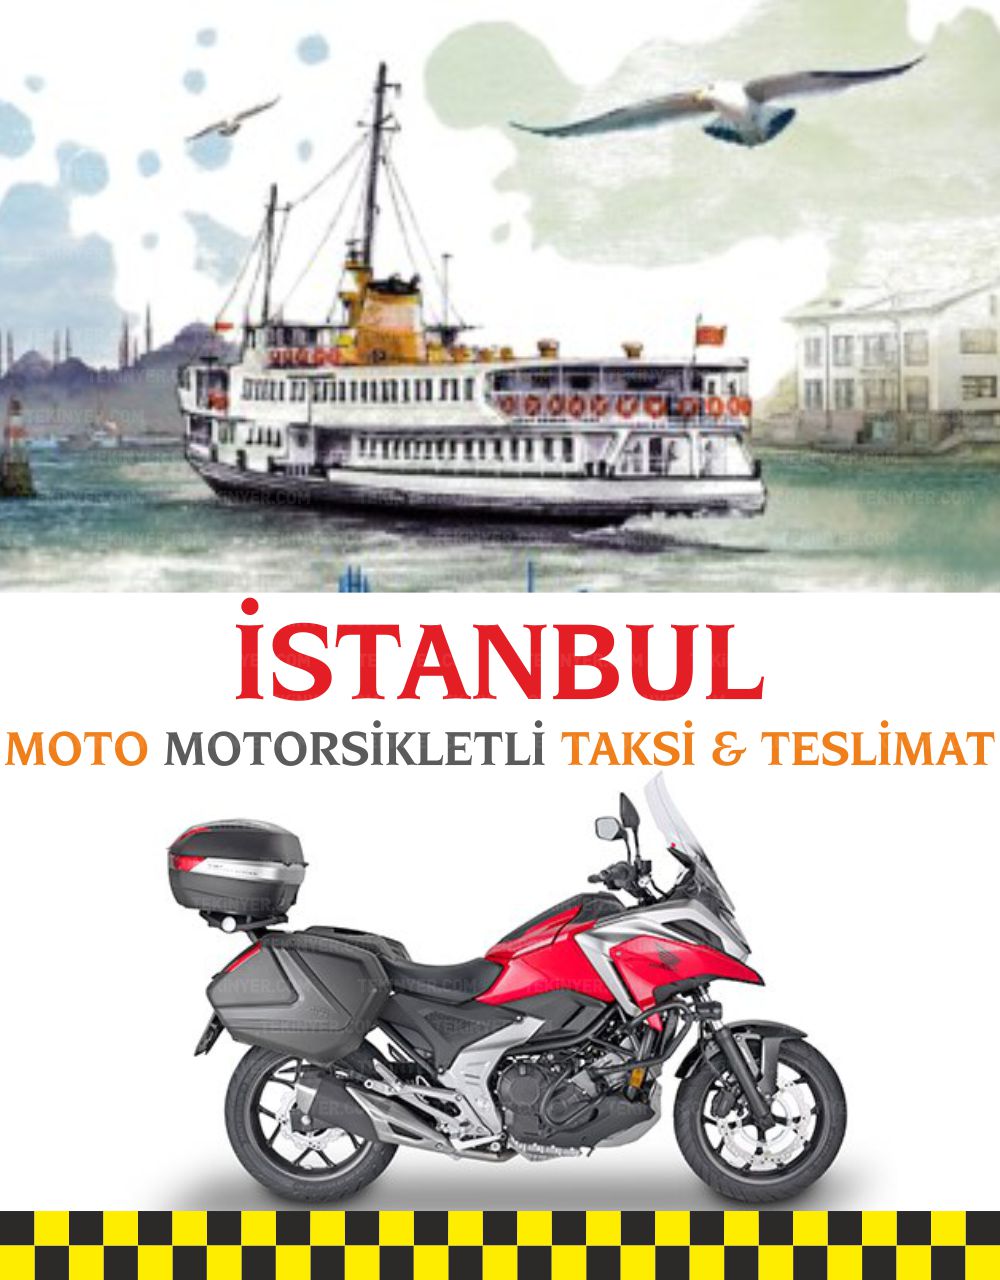 Motocular istanbul